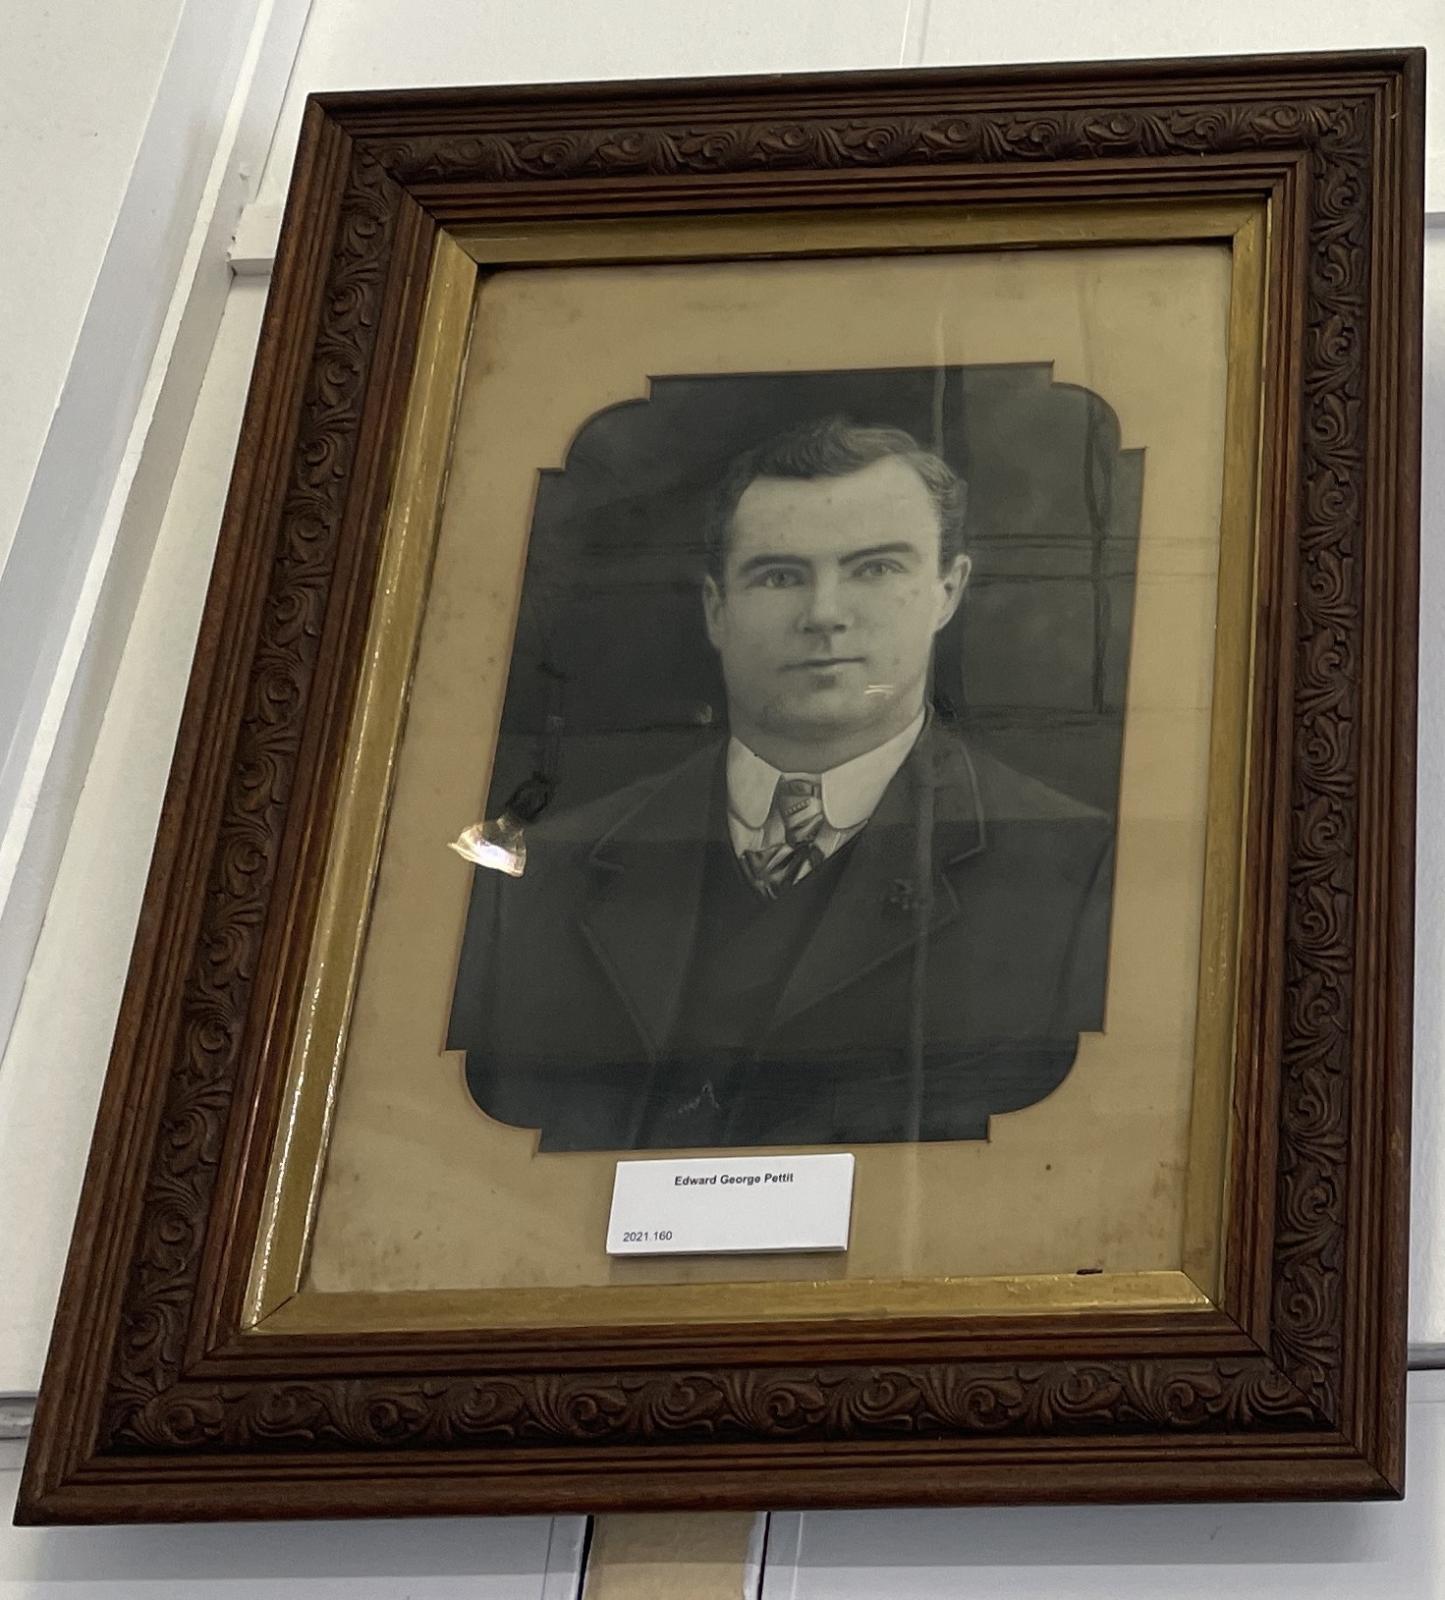 Framed photograph of Edward George Pettit